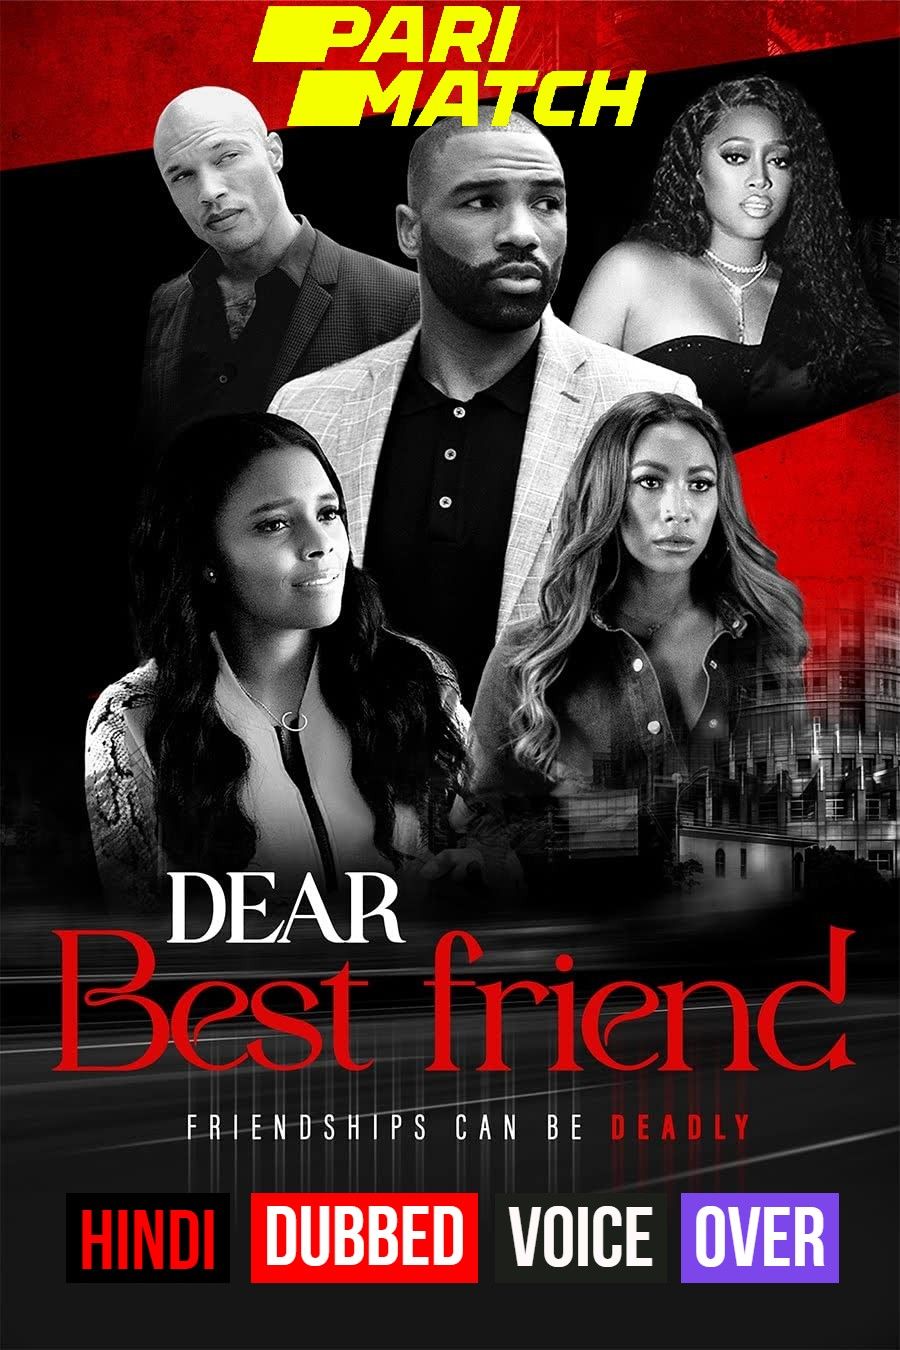 Dear Best Friend (2021) Hindi (Voice Over) Dubbed WEBRip download full movie